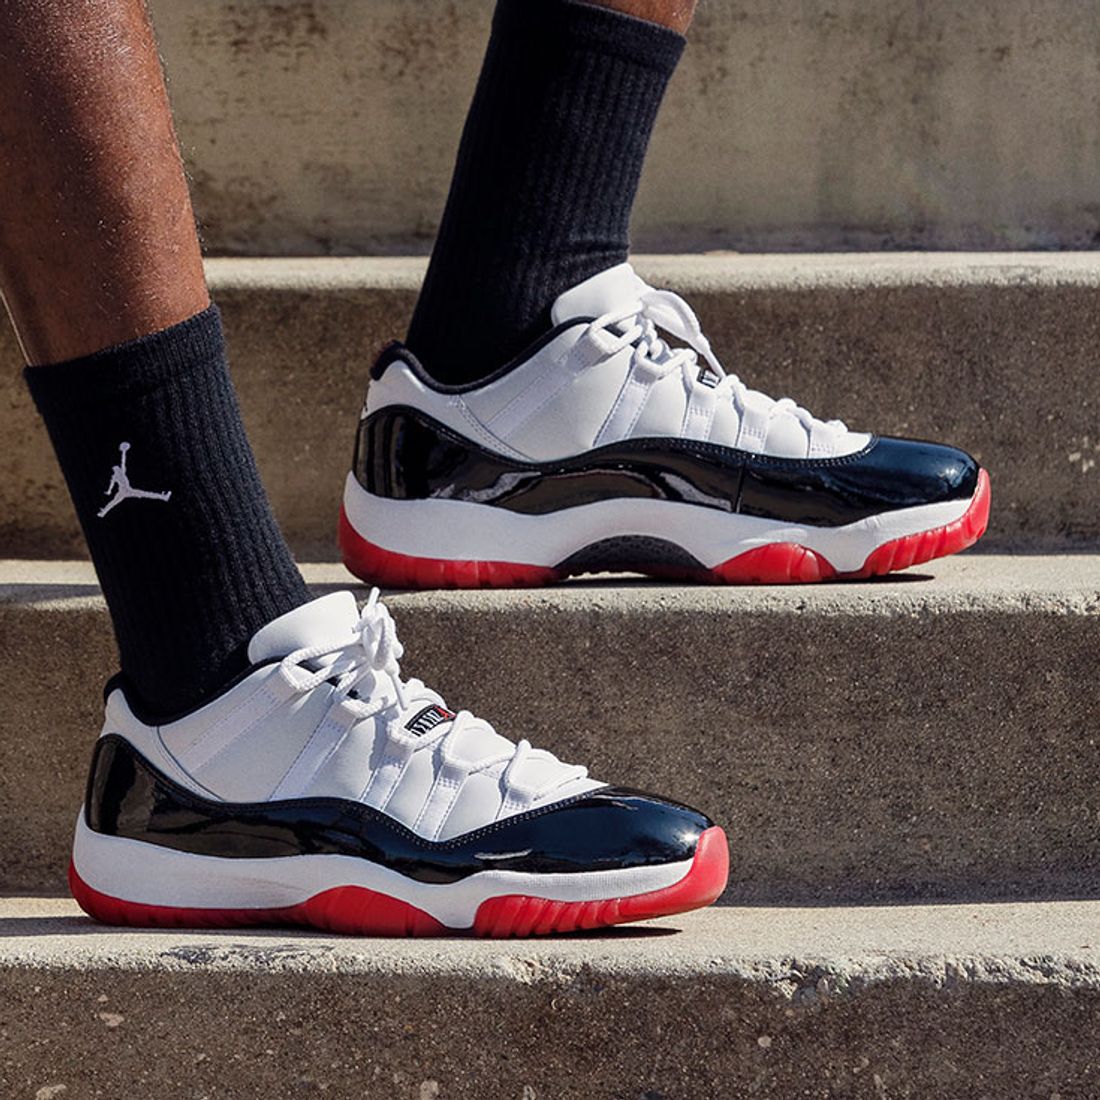 The Air Jordan 11 Low Black/Red the Best of to JD Sports - Sneaker Freaker